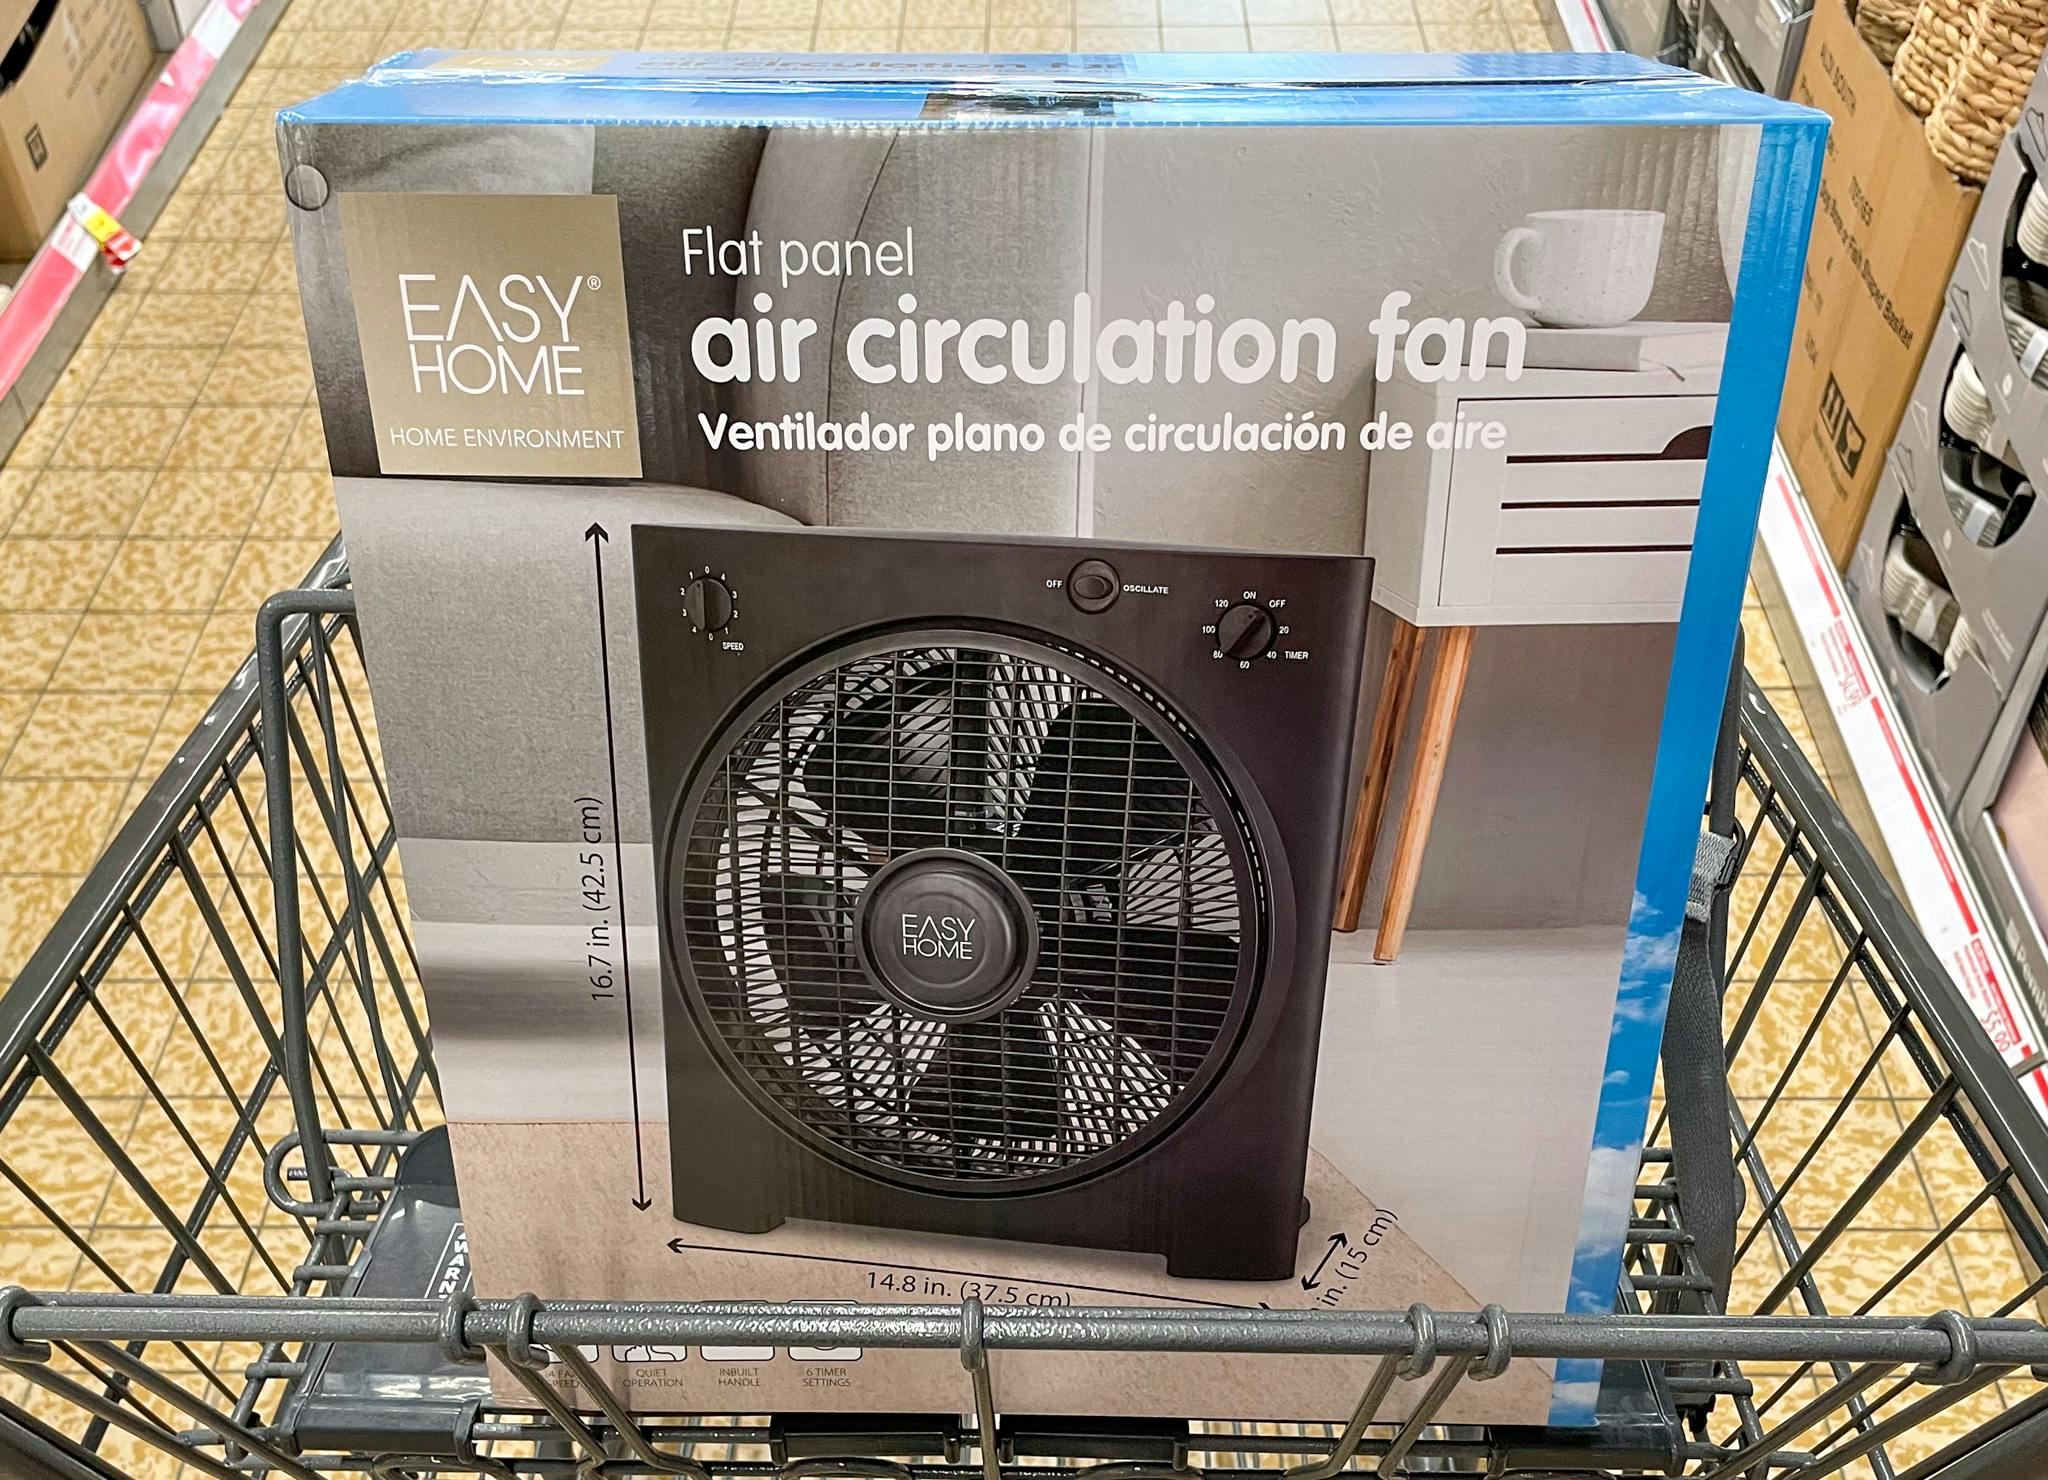 air circulation fan in a cart at aldi